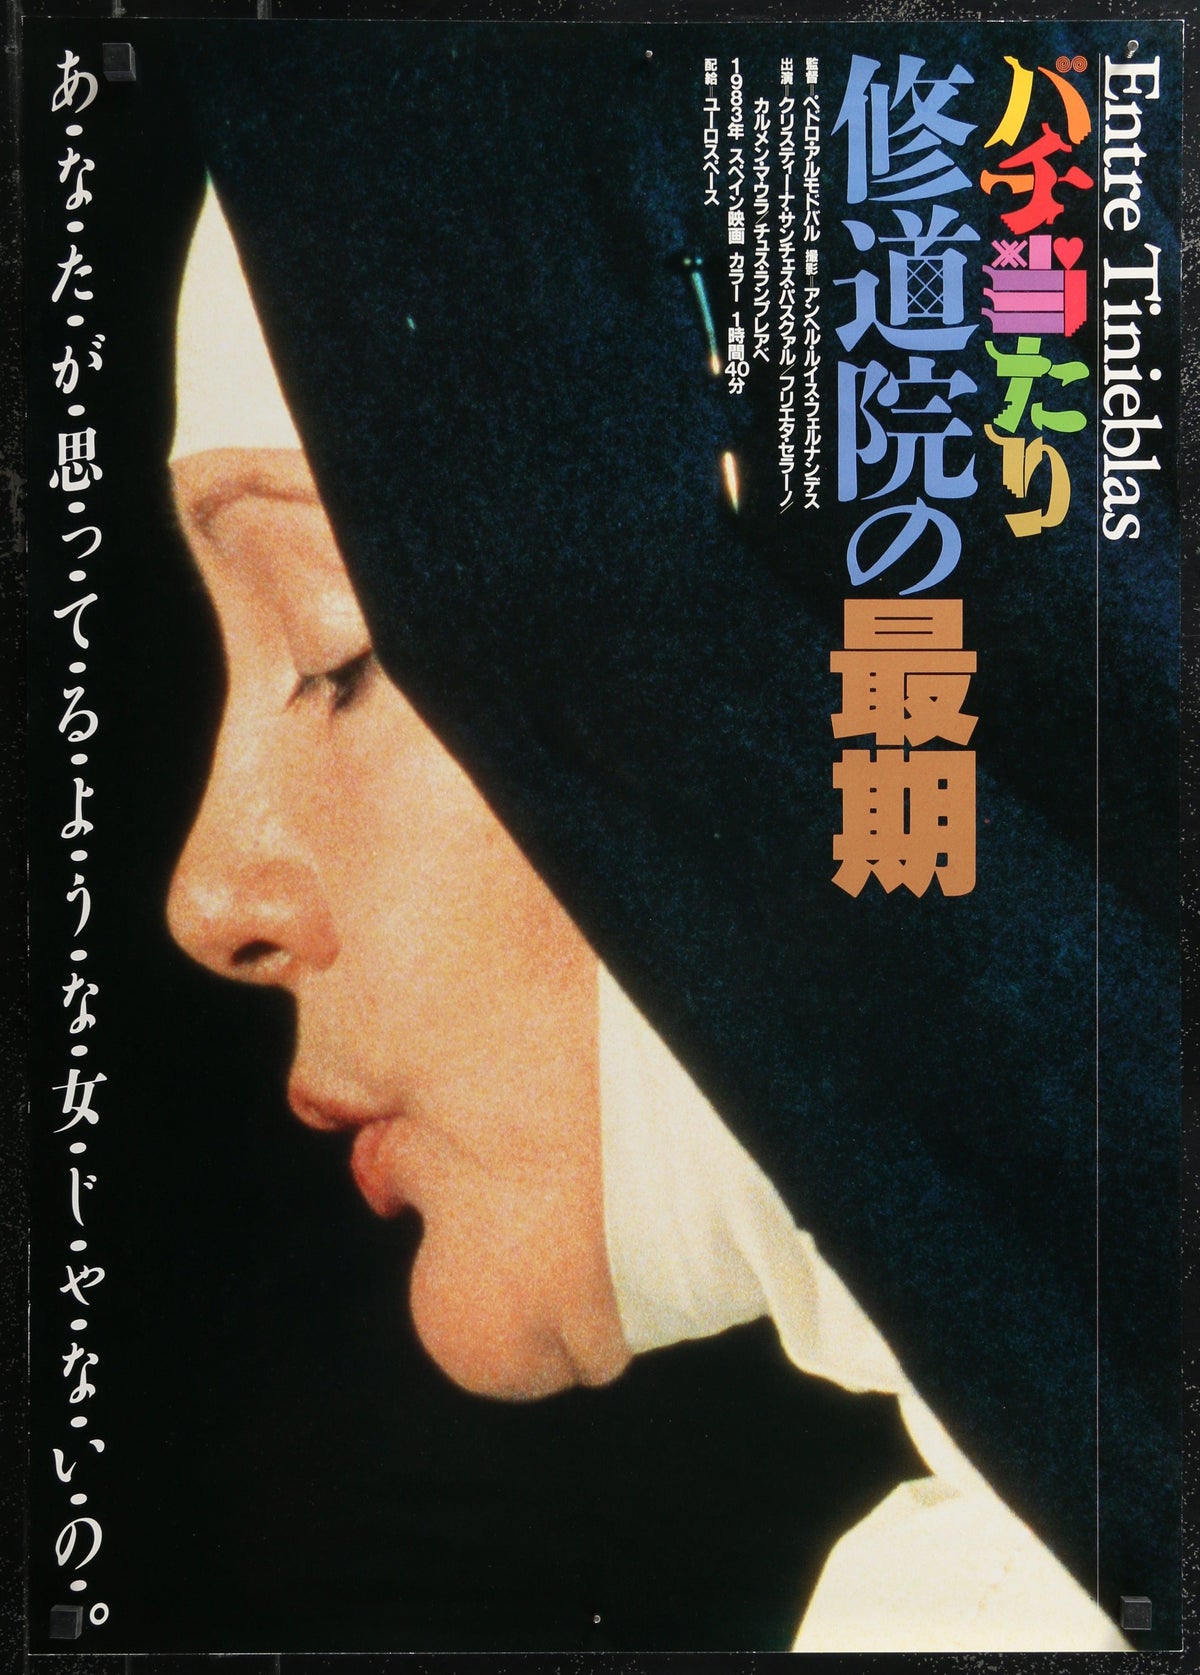 Dark Habits Japanese 1 Panel (20x29) Original Vintage Movie Poster